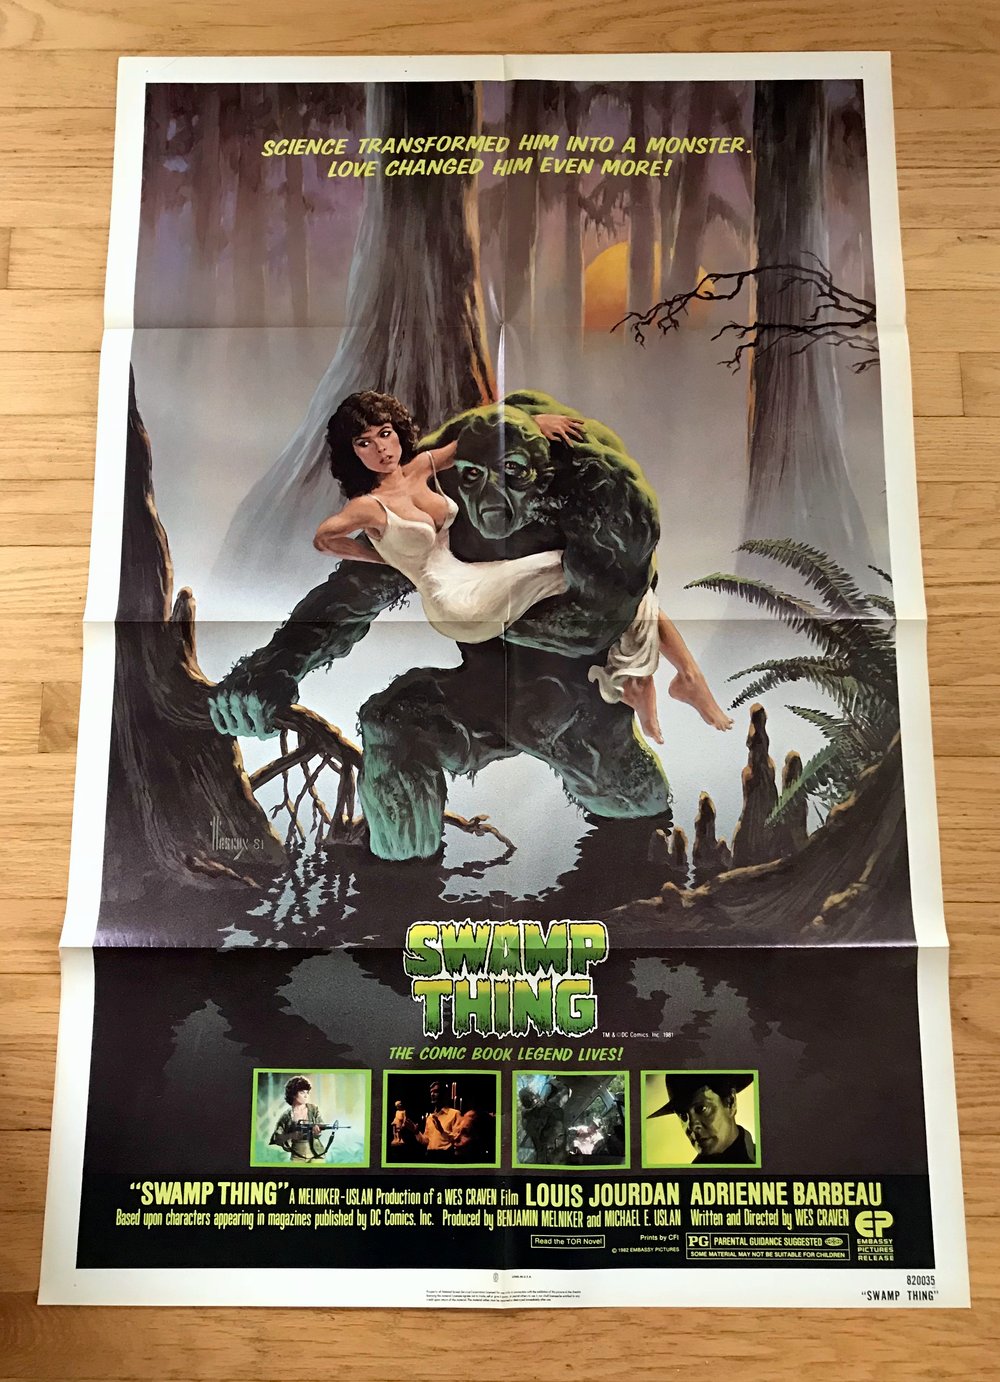 1982 SWAMP THING Original U.S. One Sheet Movie Poster